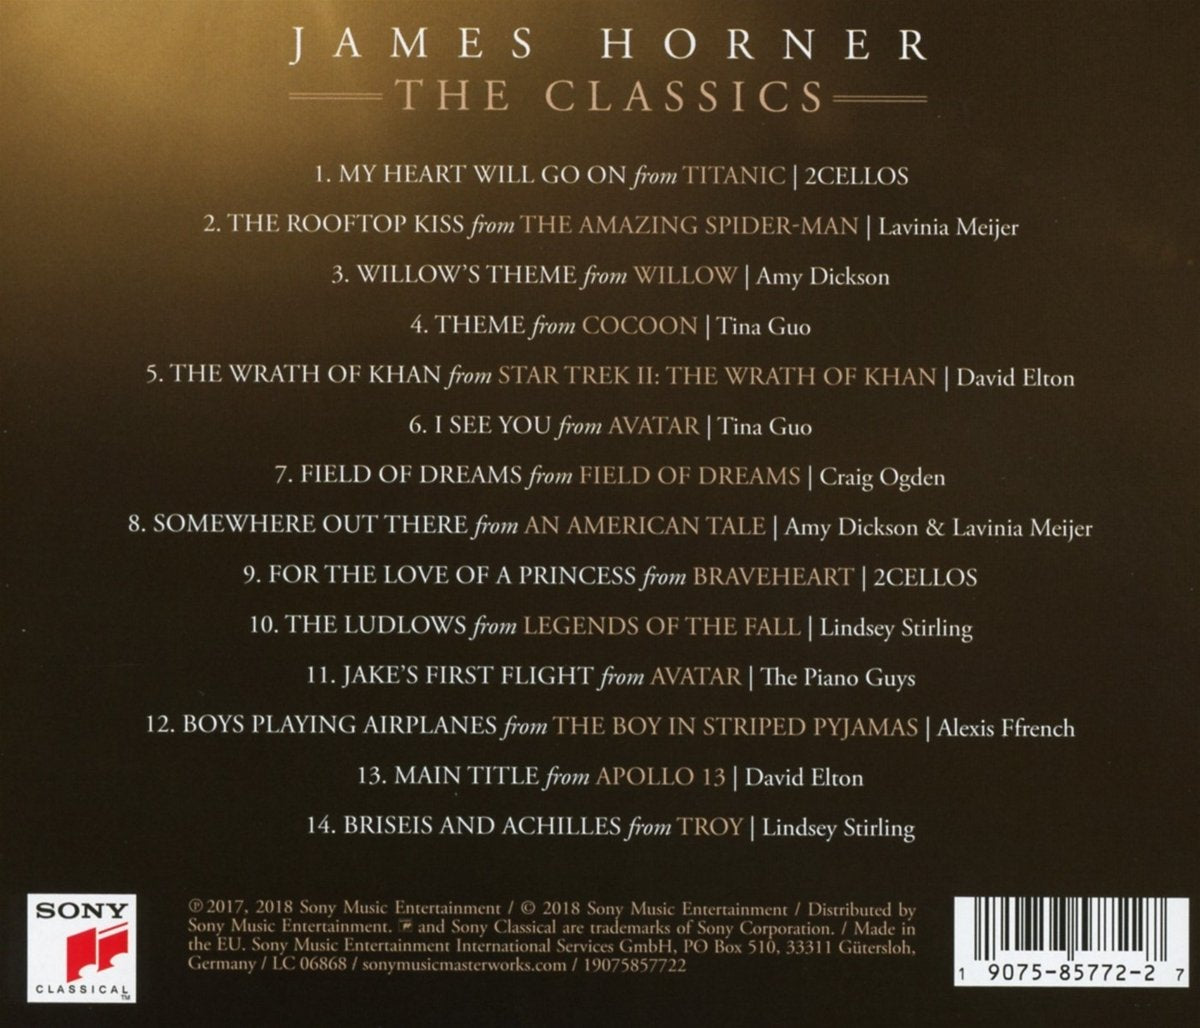 JAMES HORNER: THE CLASSICS